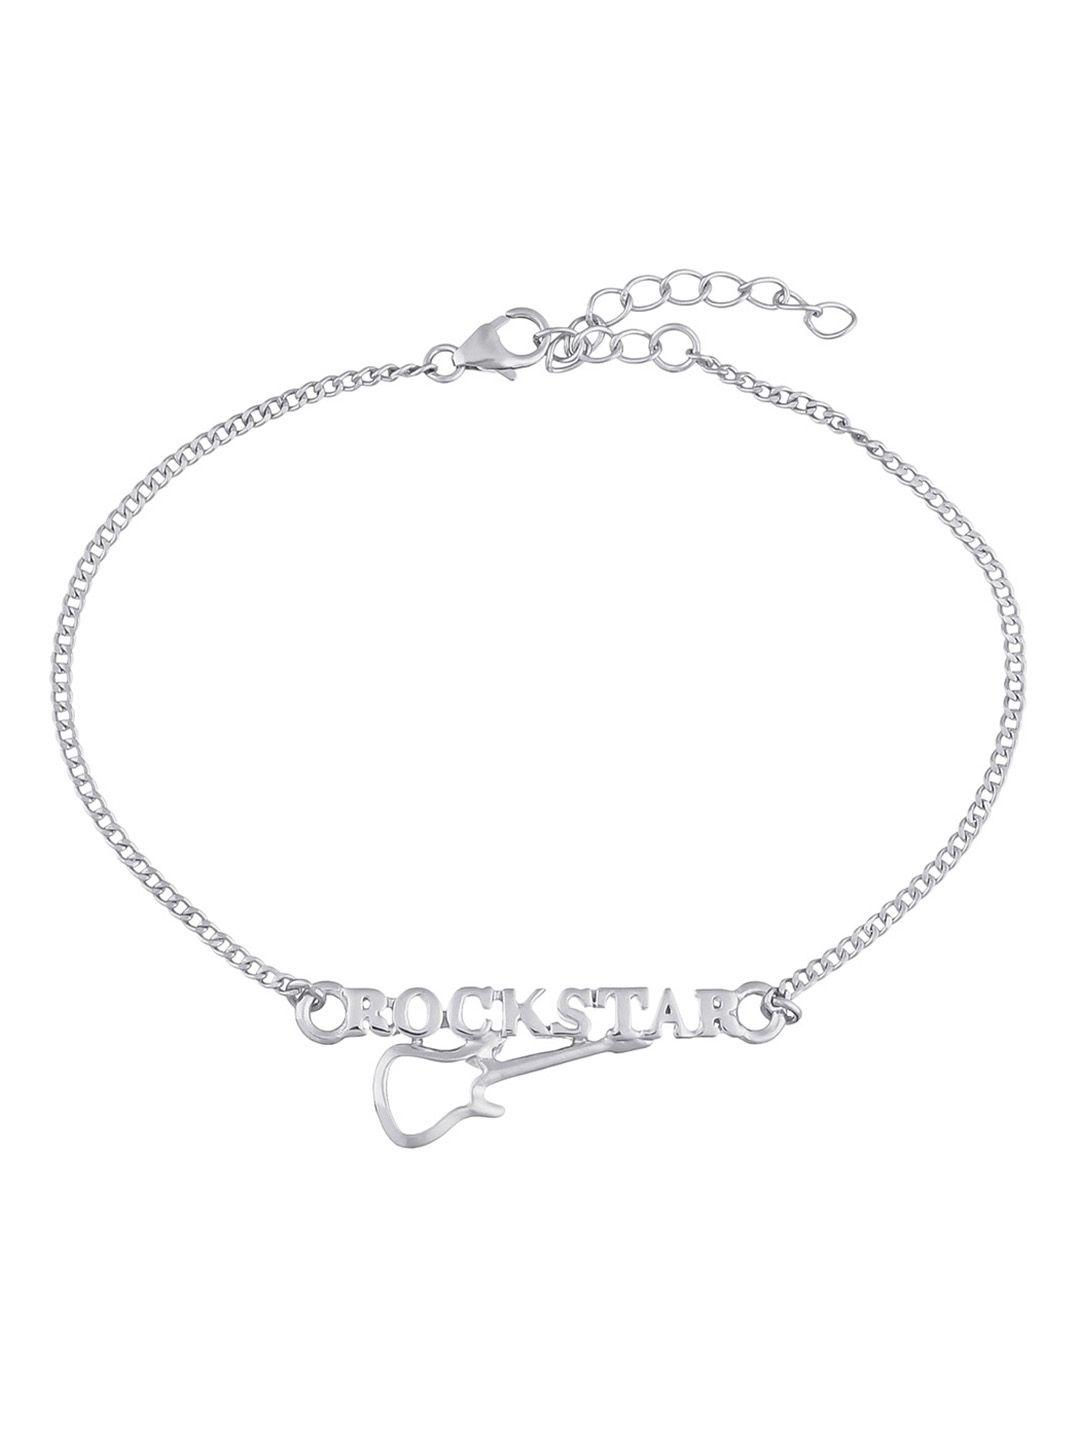 voylla-925-sterling-silver-precious-rockstar-bracelet-rakhi